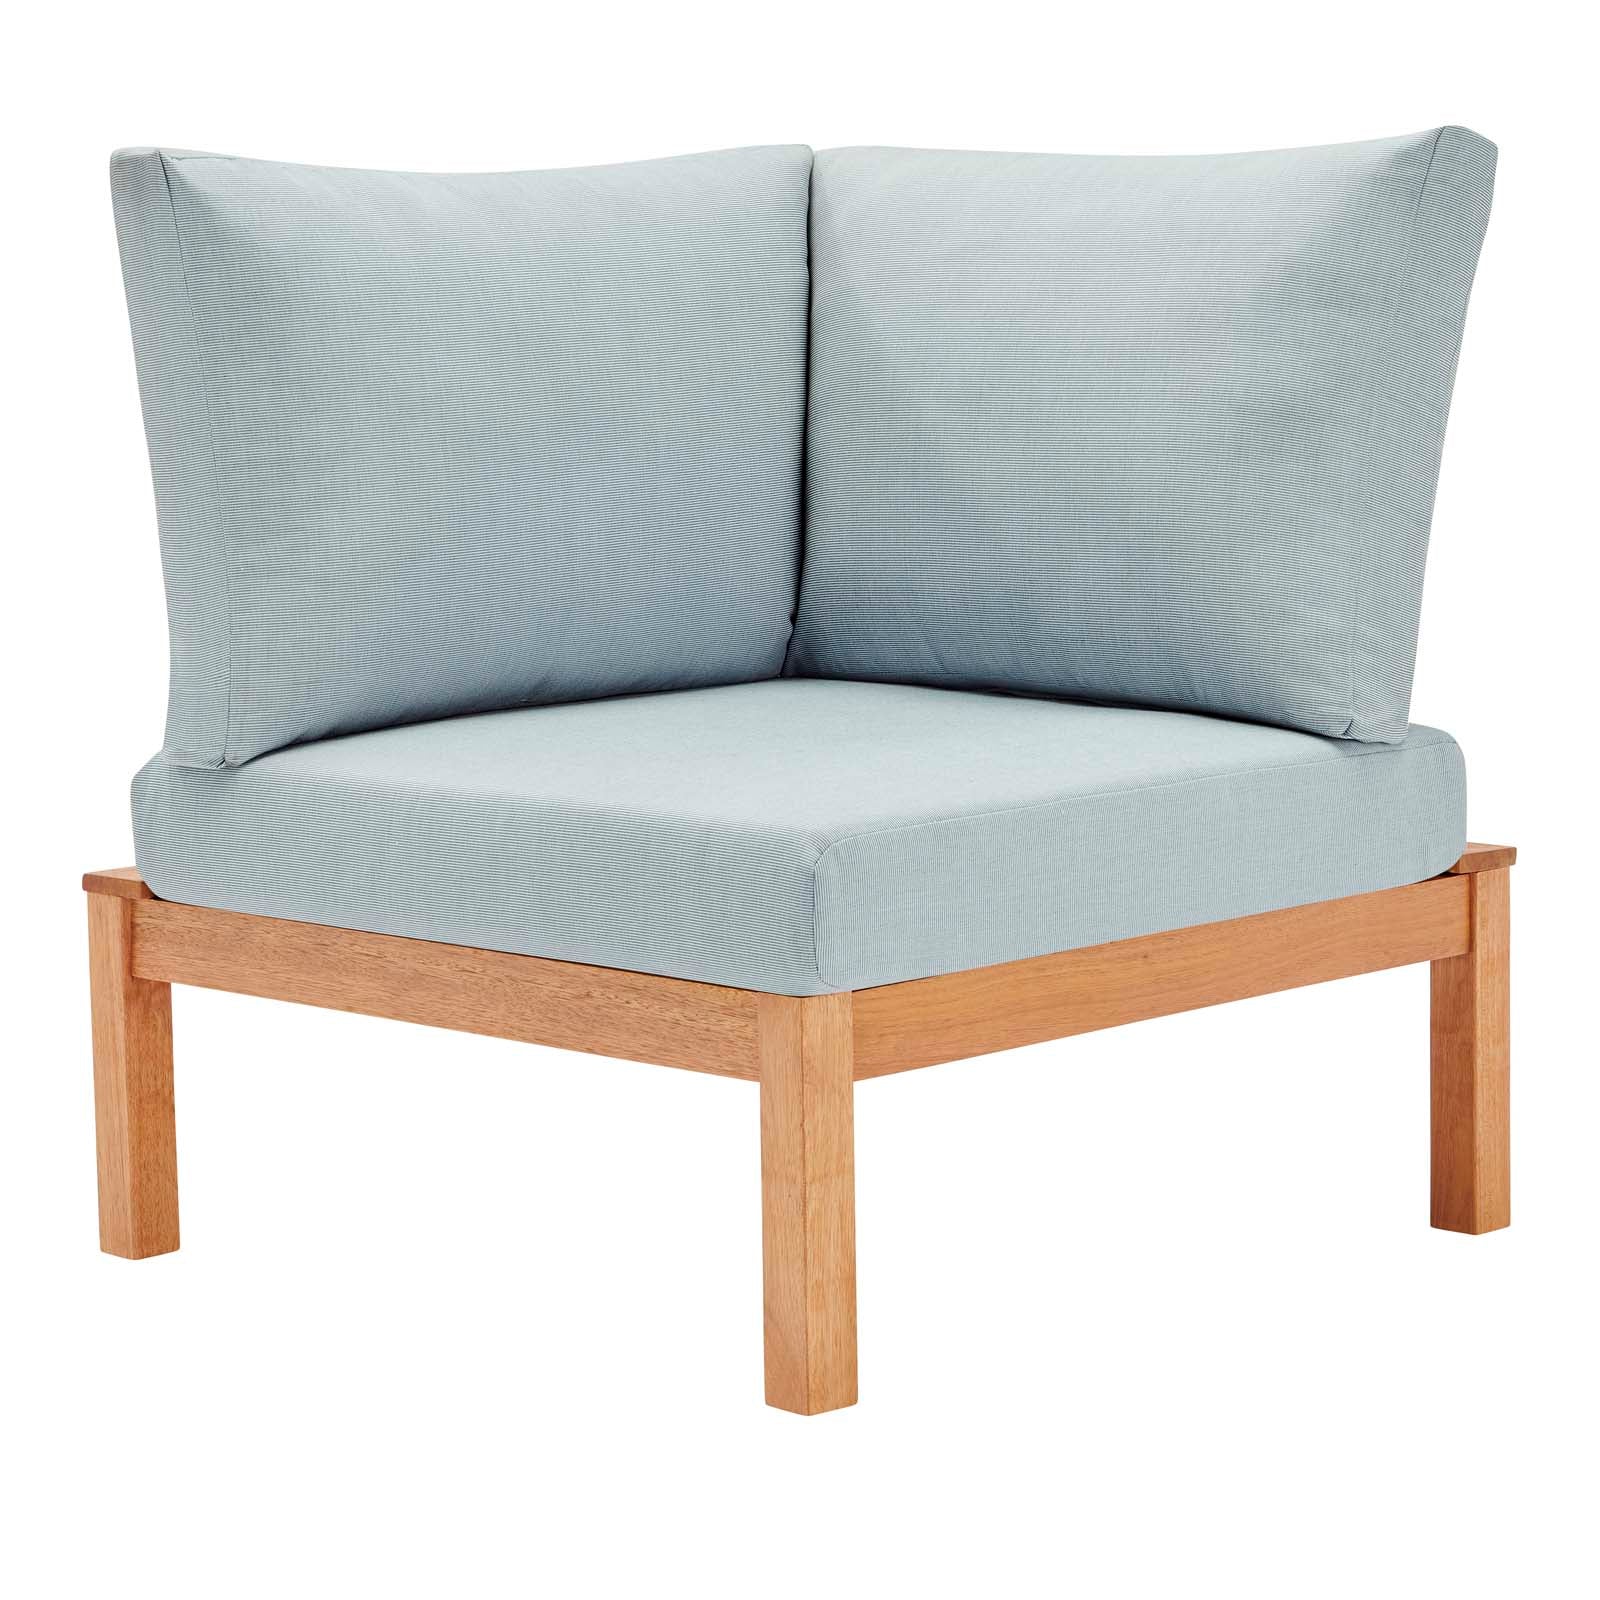 Freeport Karri Wood Sectional Sofa Outdoor Patio Corner Chair - East Shore Modern Home Furnishings